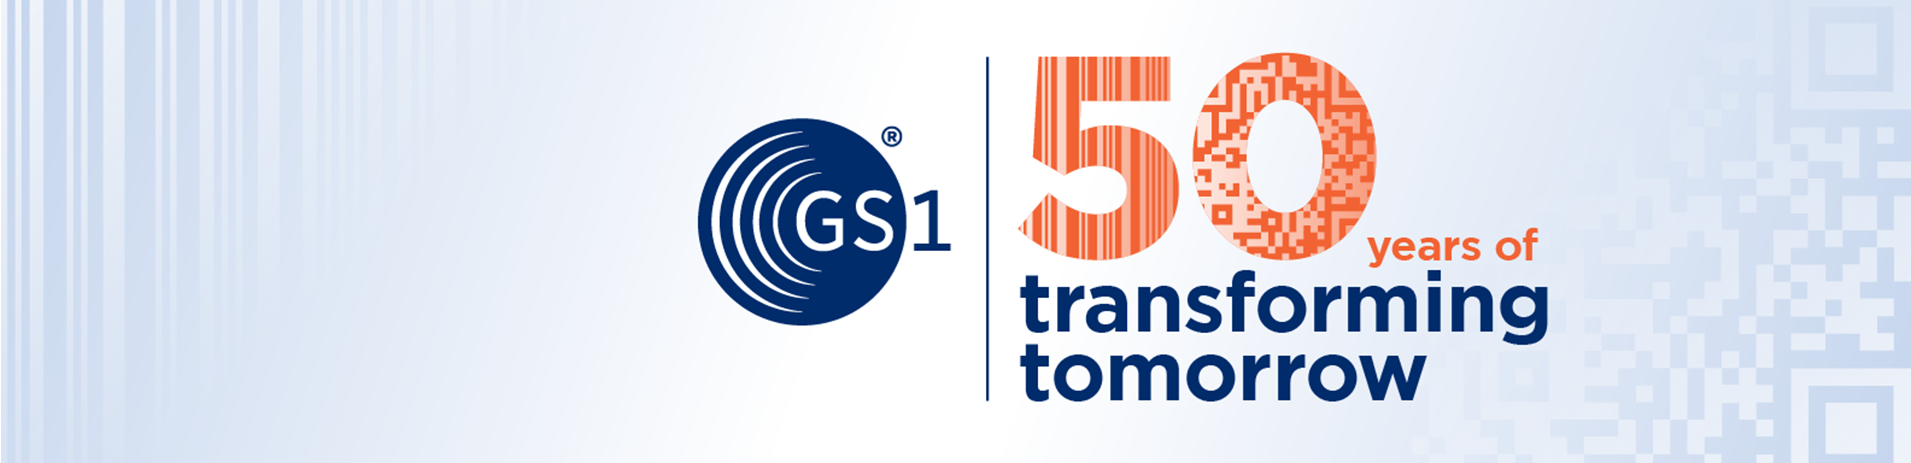 GS1 50 Years